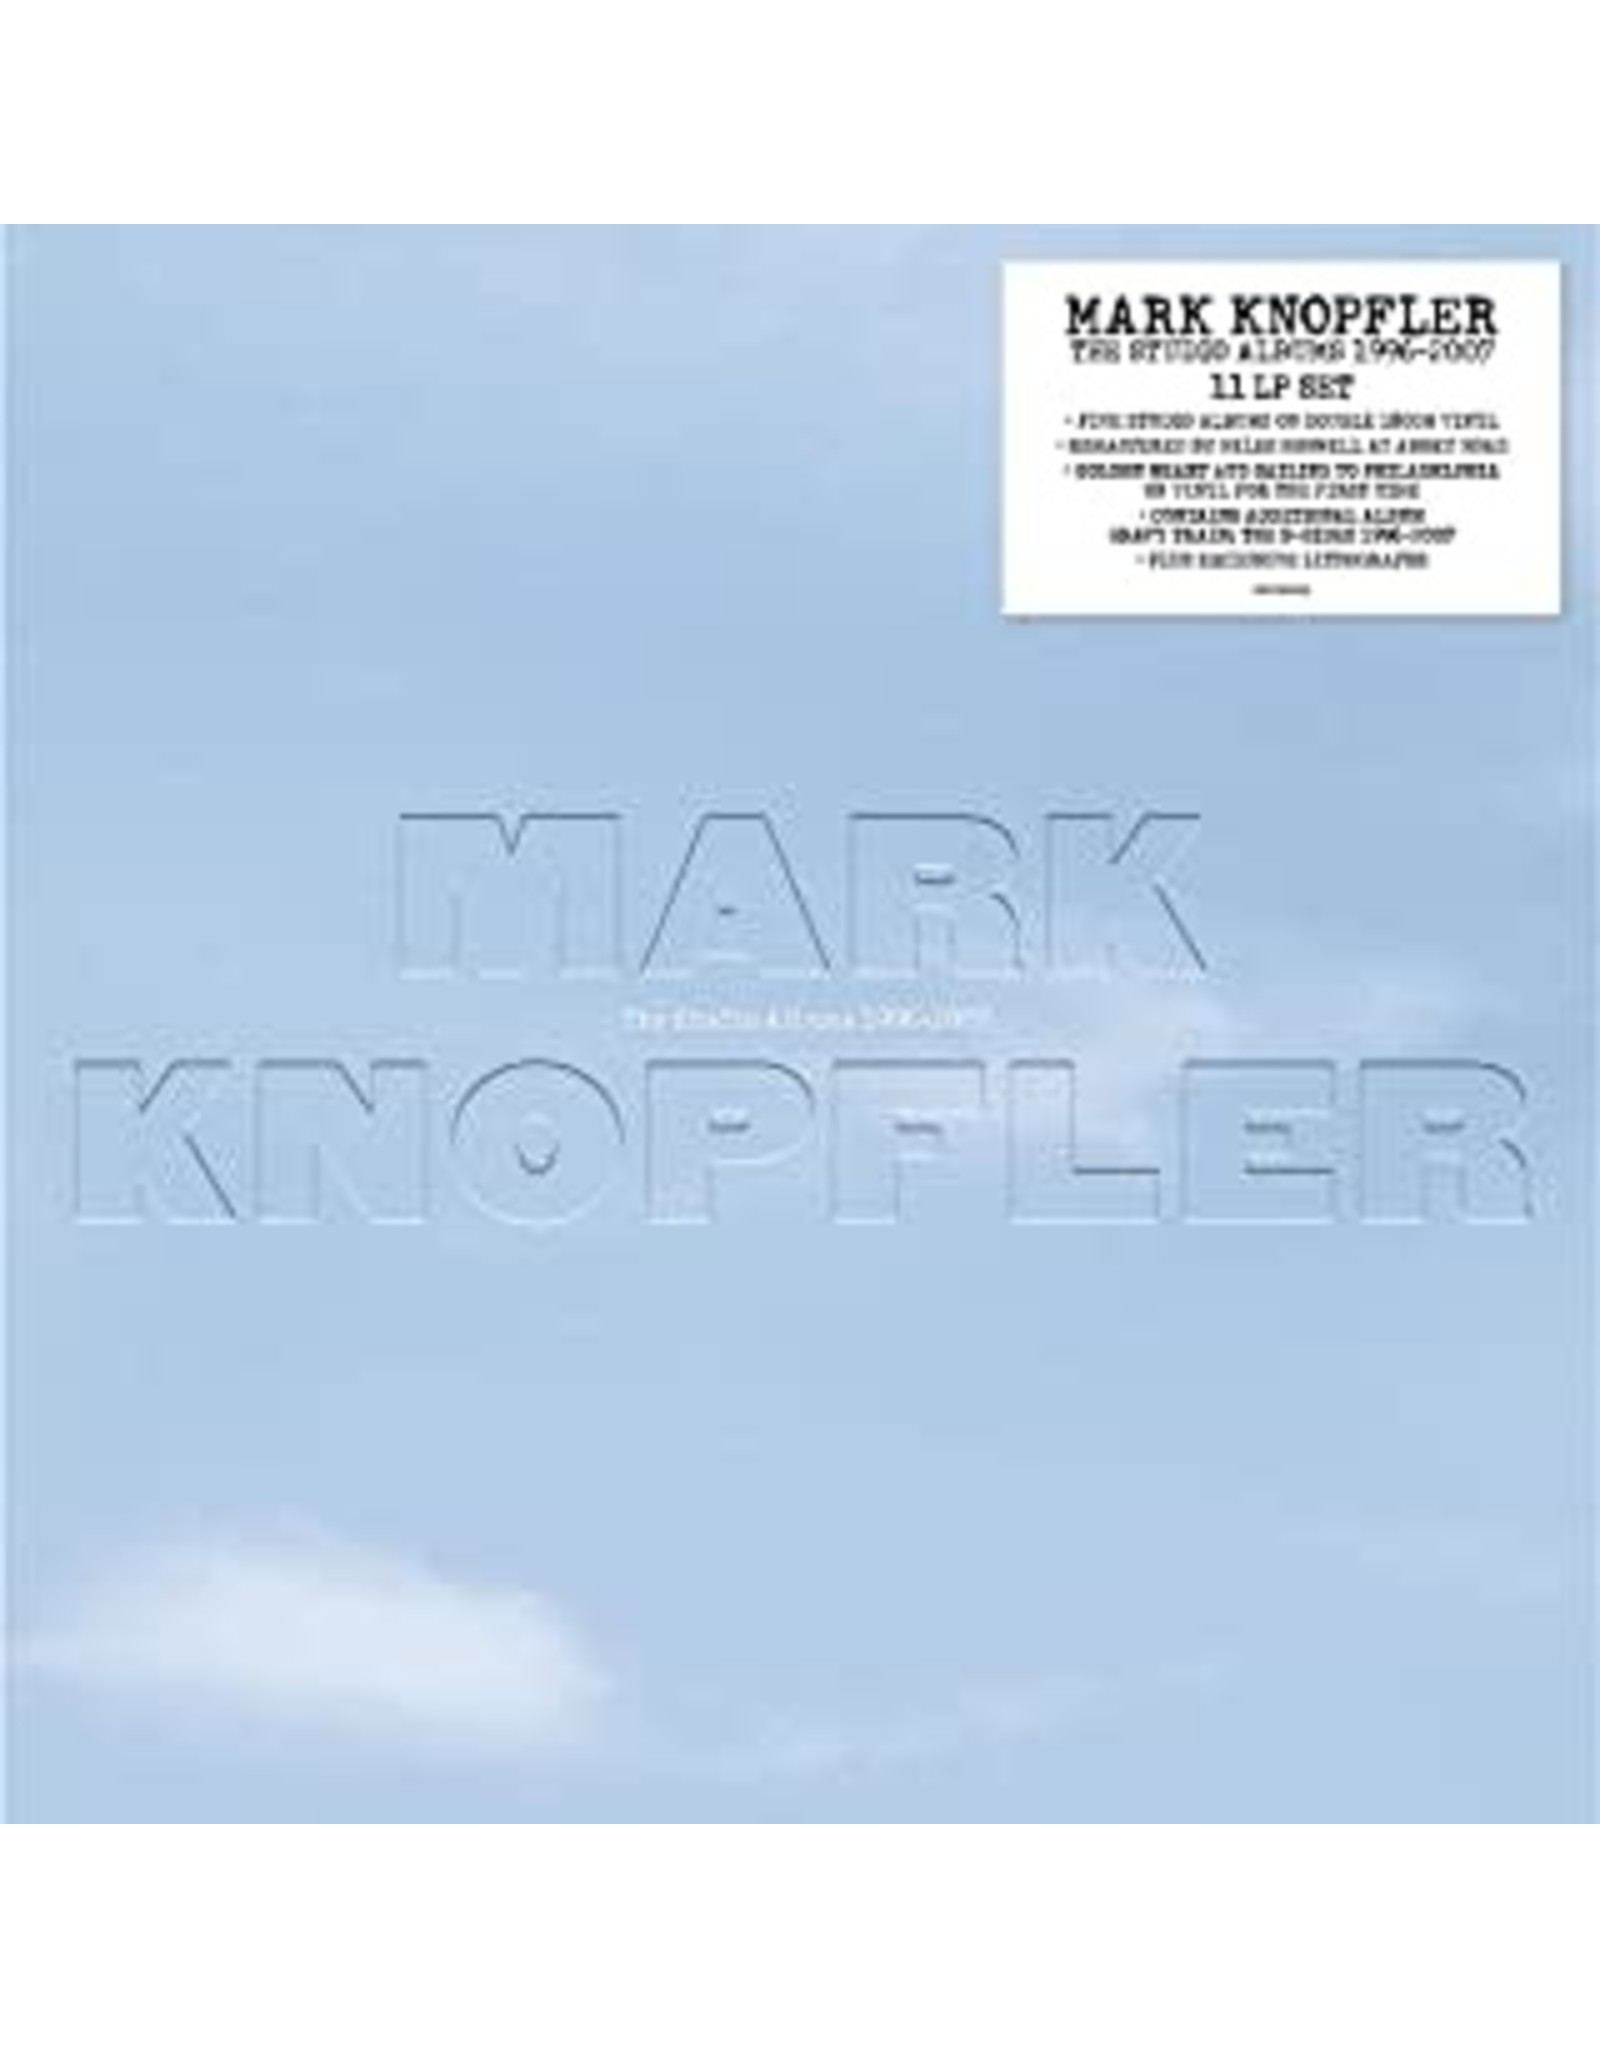 Knopfler, Mark - Studio Albums 1996-2007 11 LP SET LP